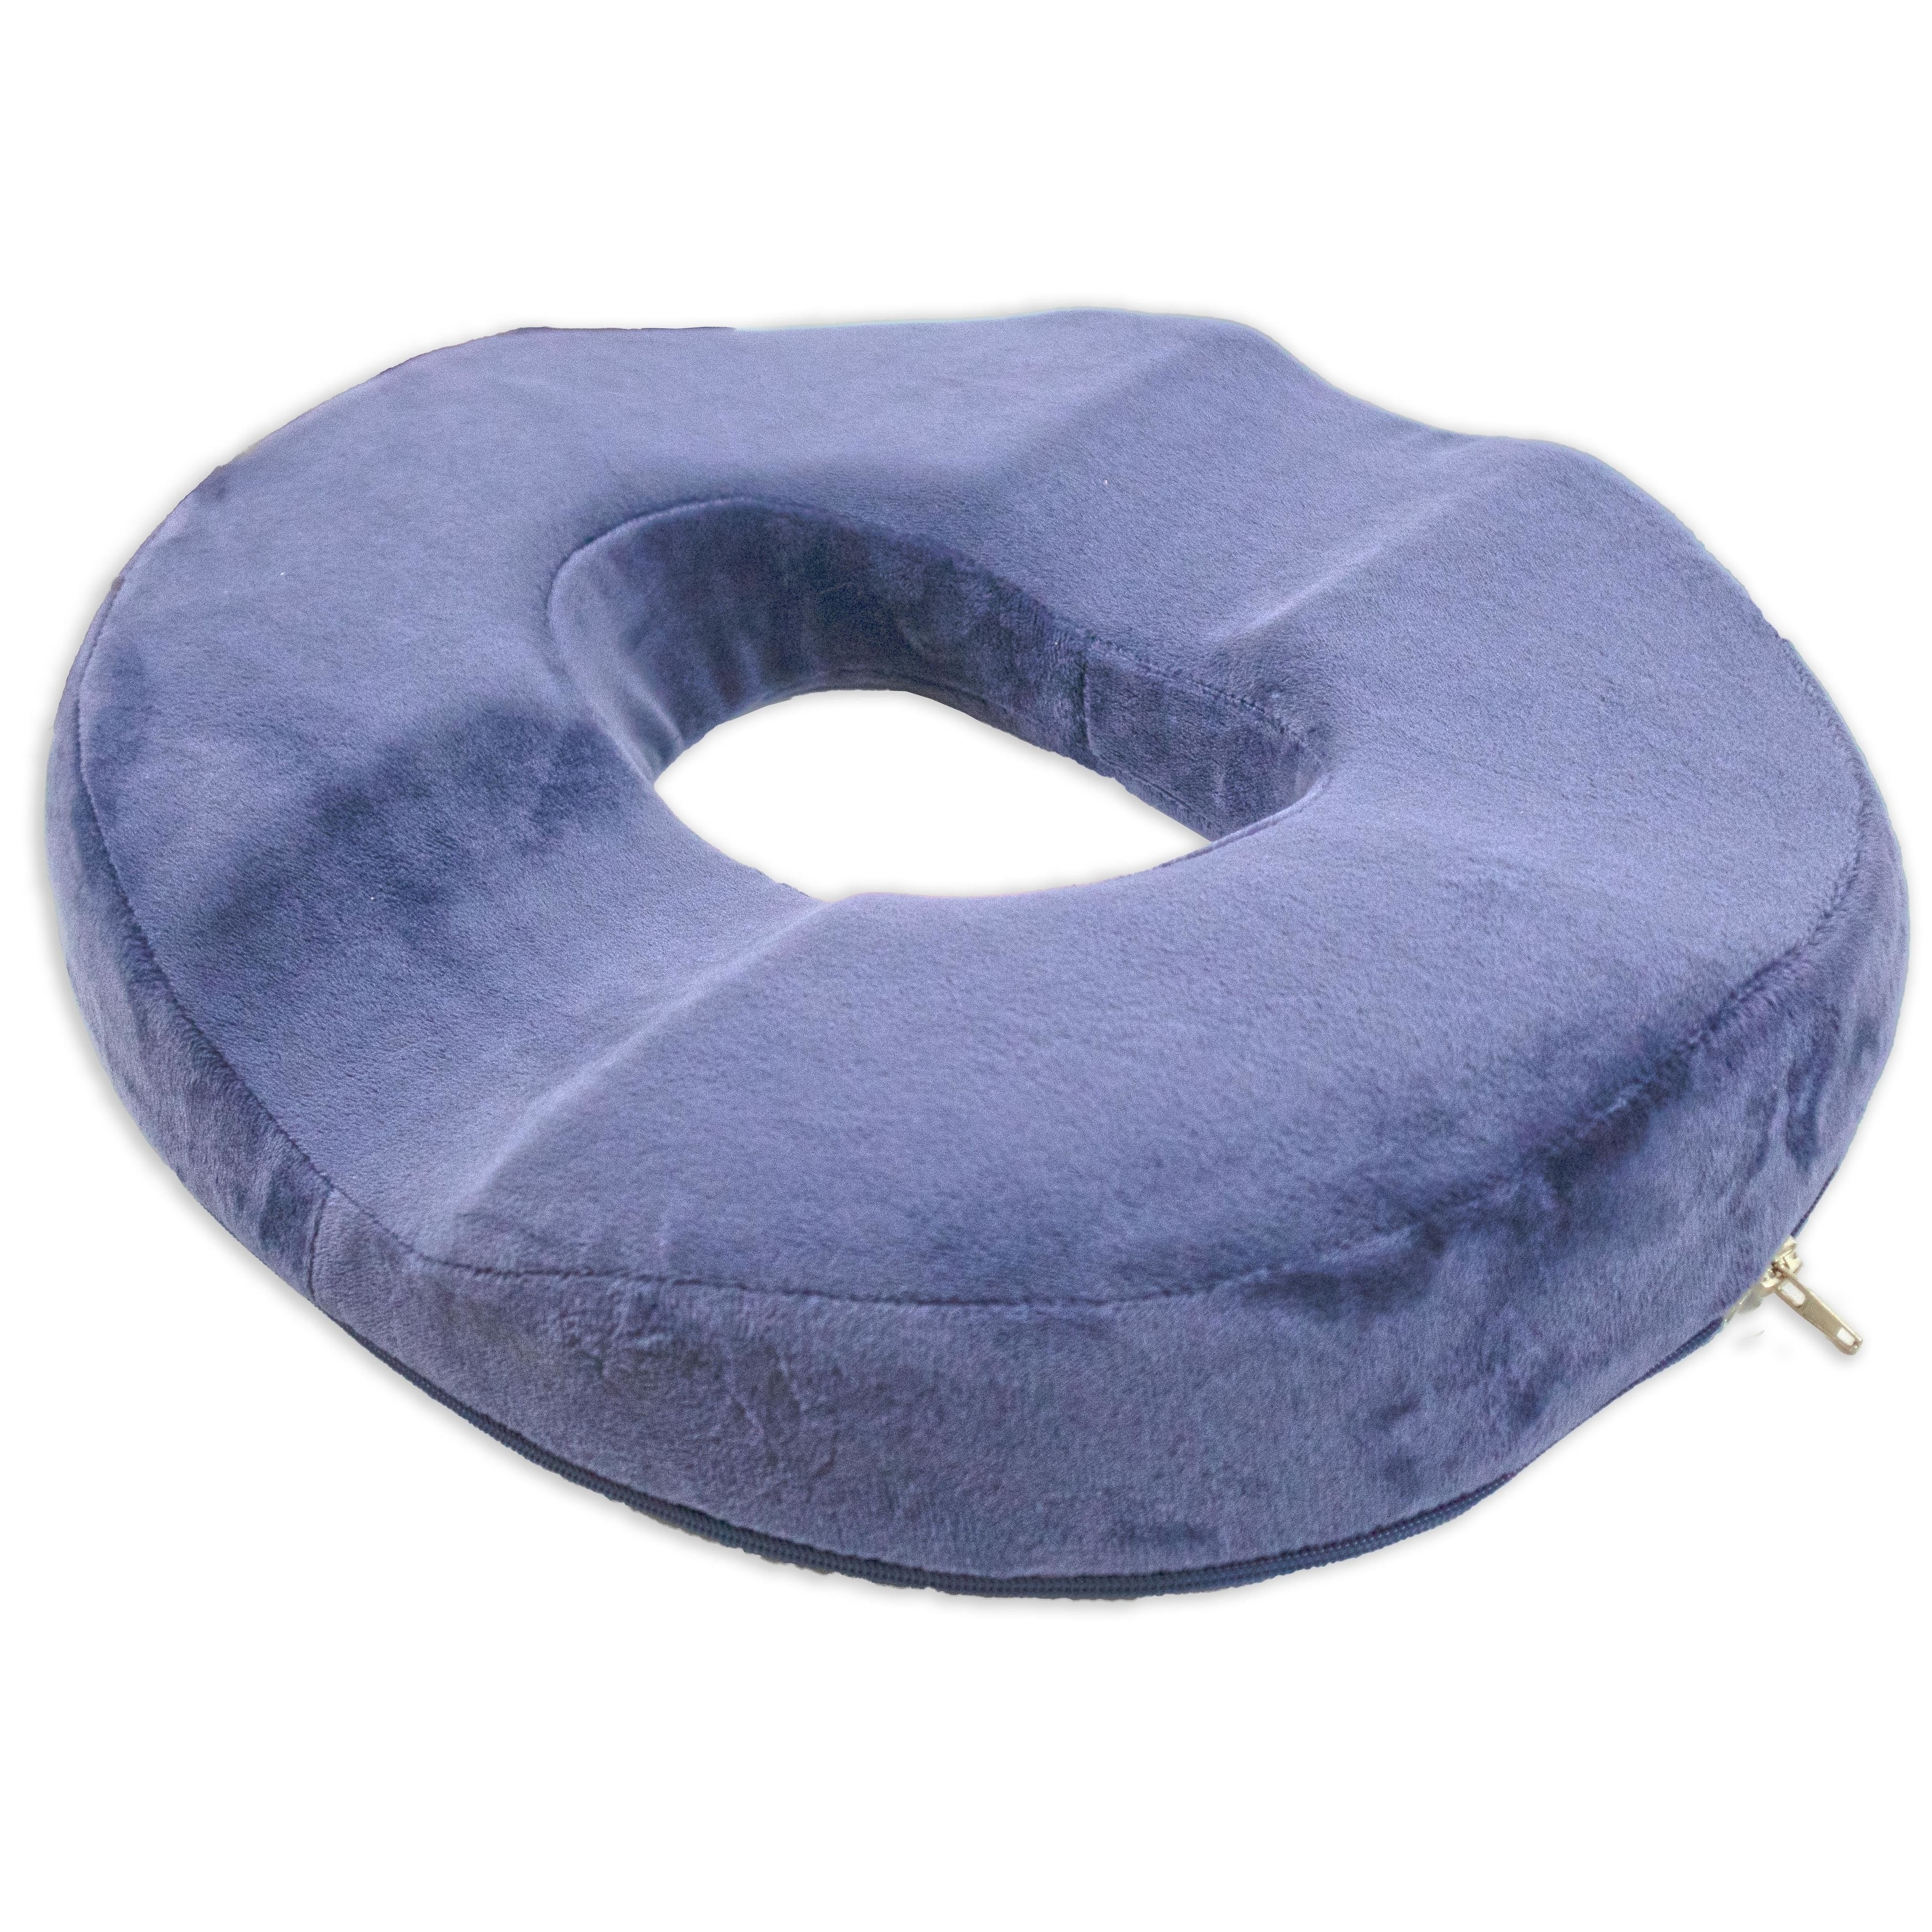 Quanlity Foam Donut Pillow Tailbone Washable Seat Cushion for